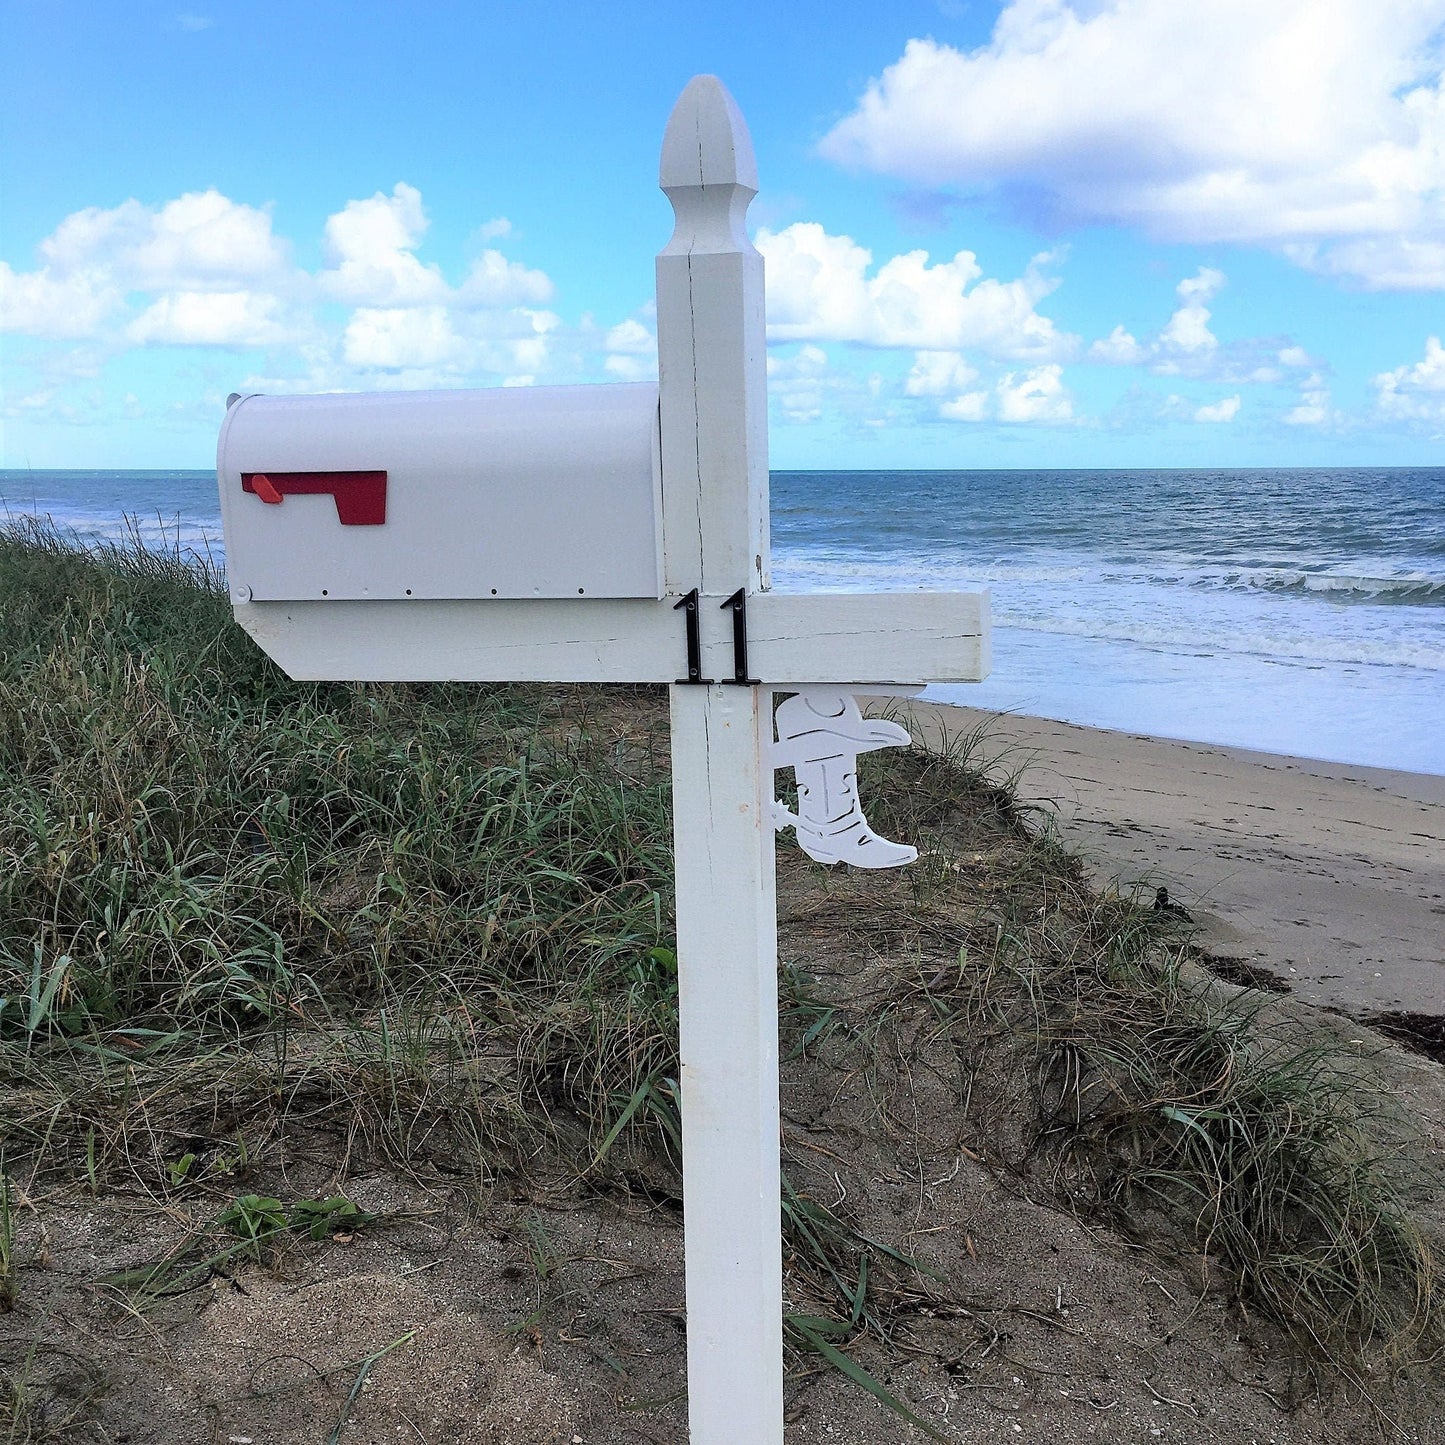 Mailbox Bracket - Cowboy Boot Small 7x9 inch, Custom Mailbox, Coastal, Tropical, Bracket, Outdoor Decor, Mailbox & Post Not Included